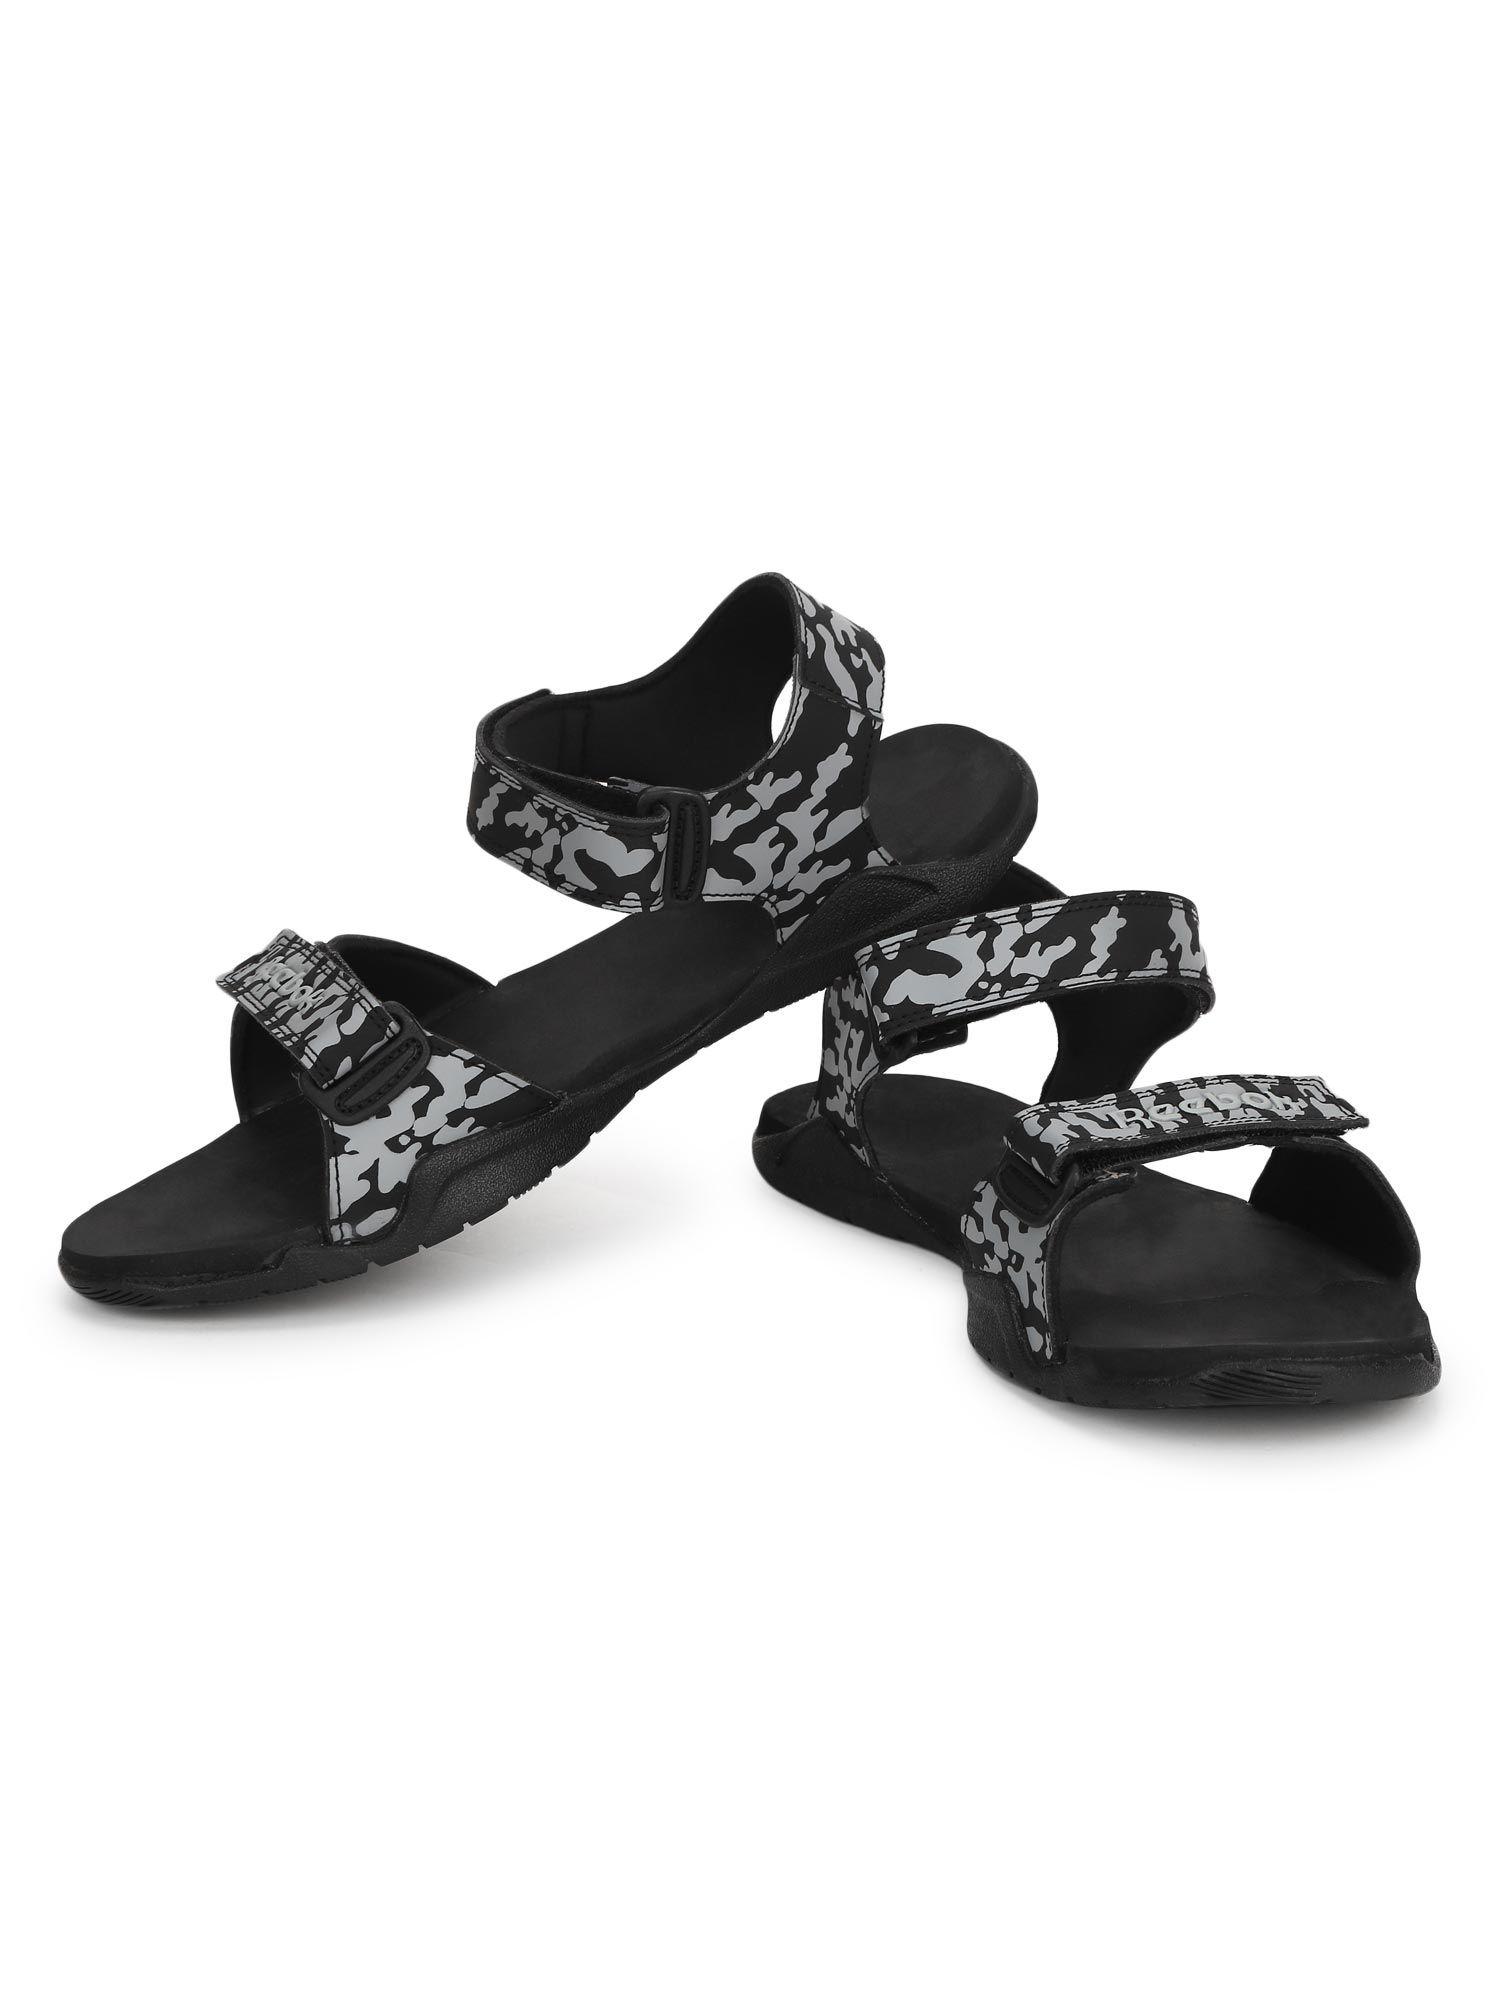 milo-sandal-black-swim-sandal